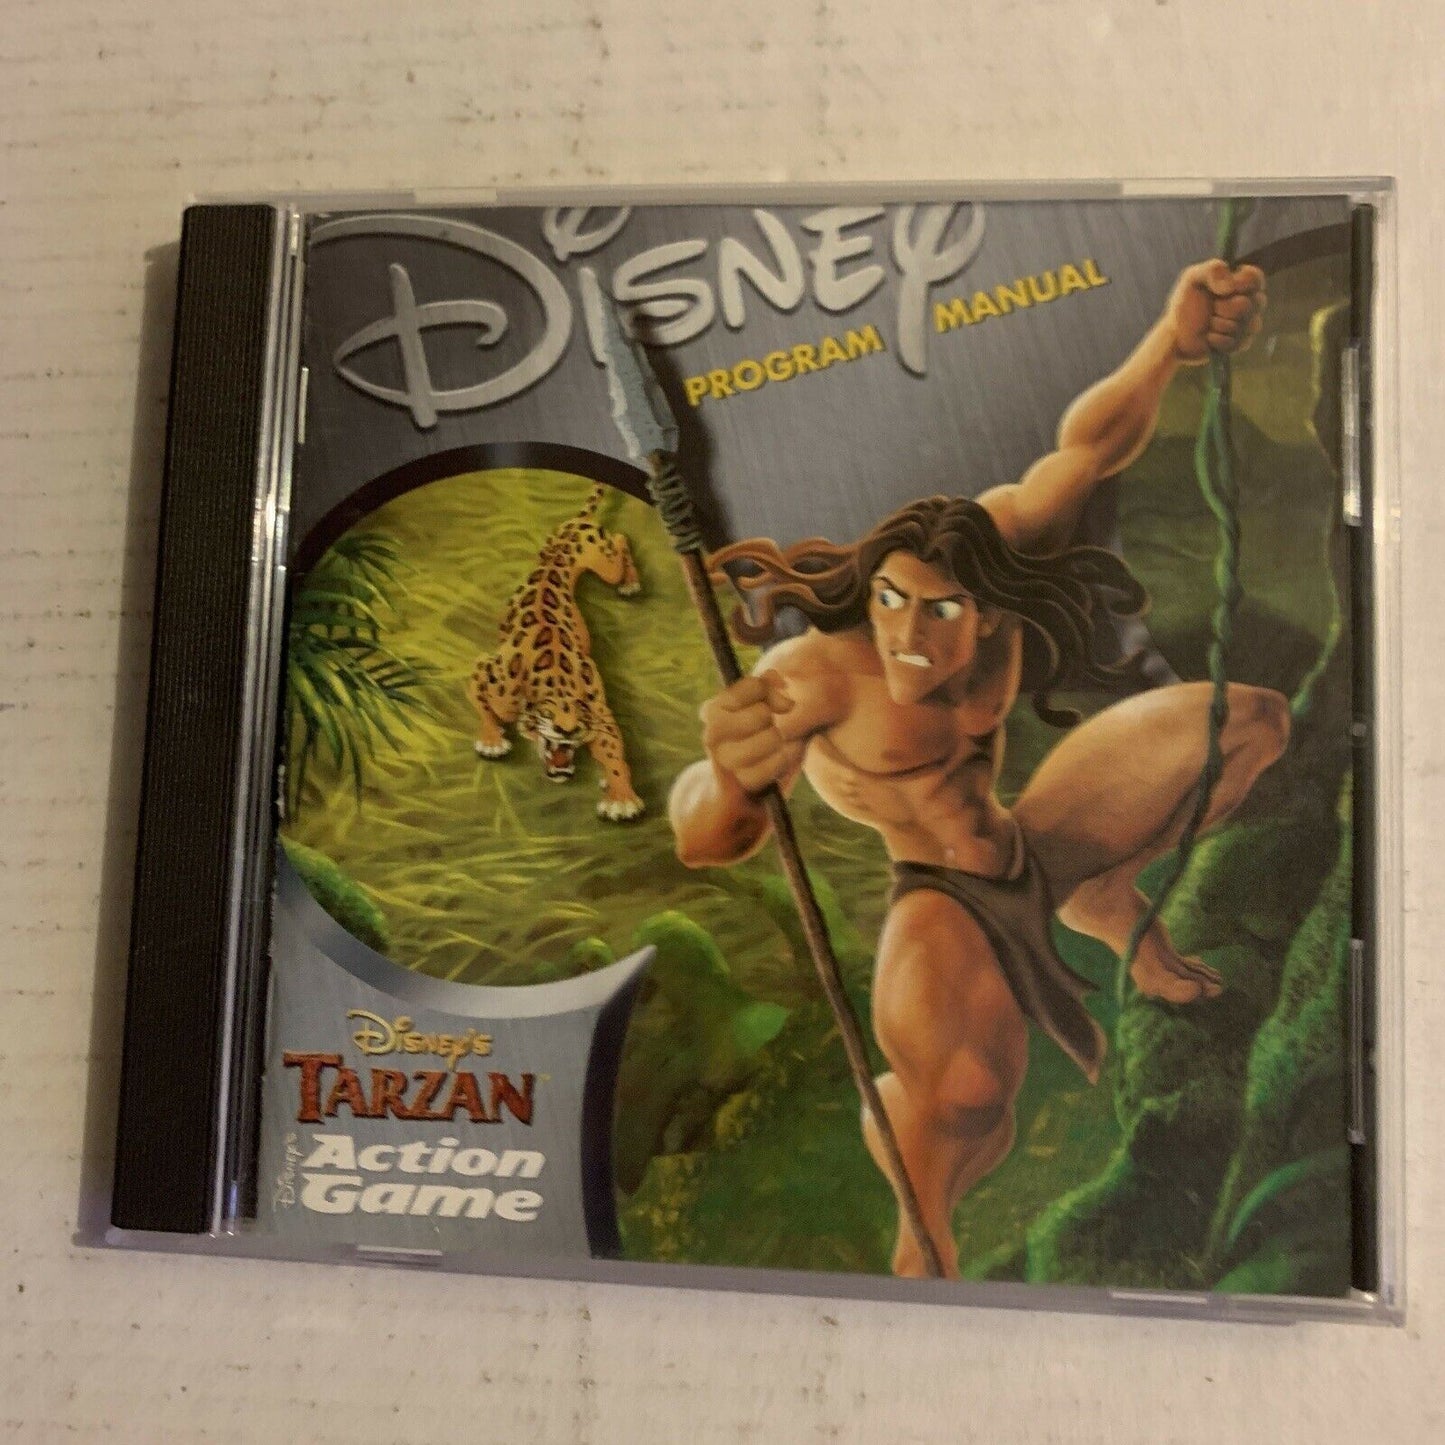 Disney's Tarzan Action Game PC CDROM 1999 Win 95